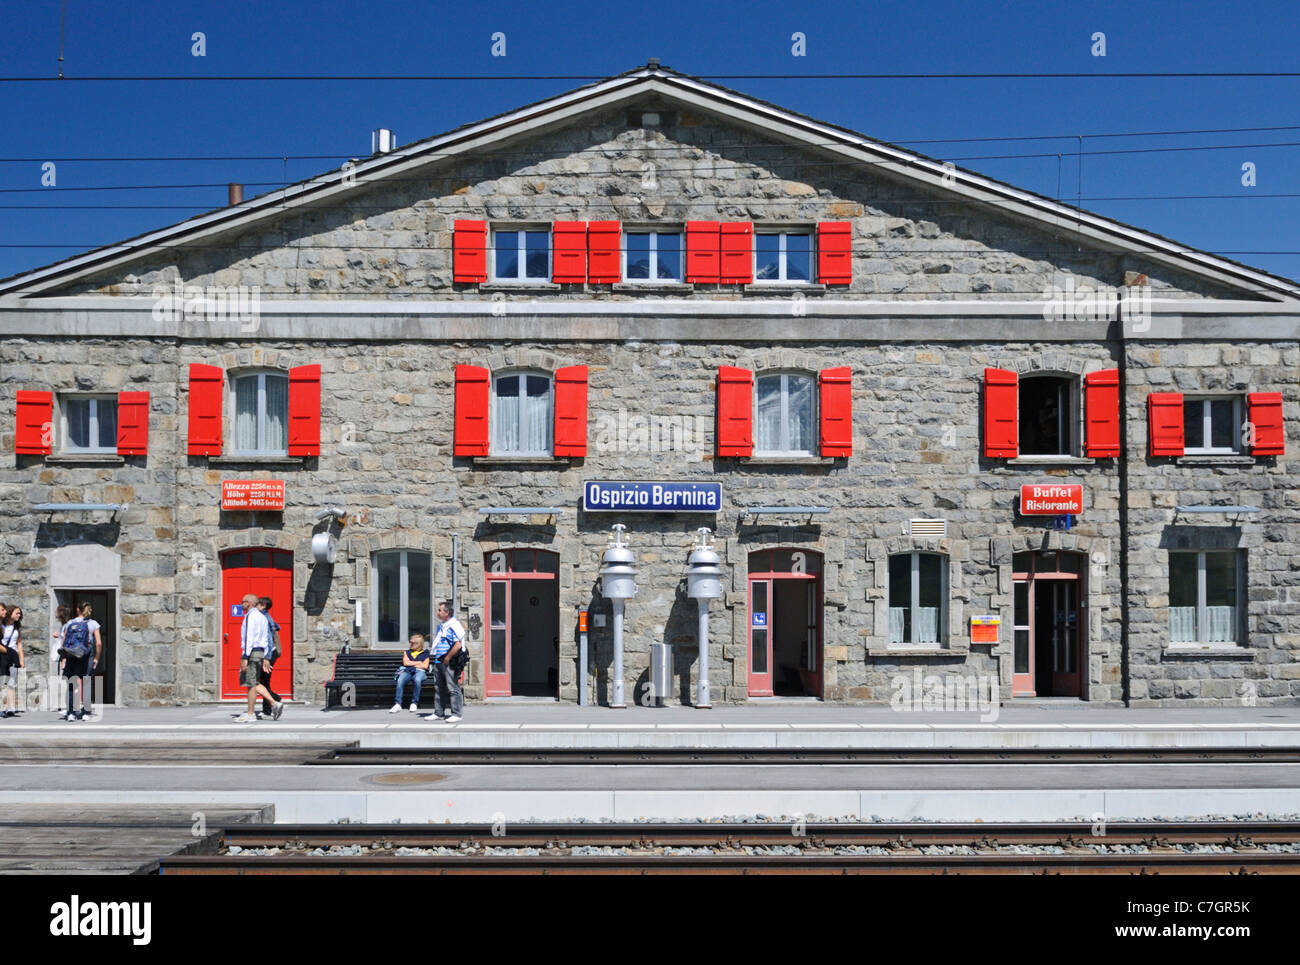 Ospizio Bernina railway station at the Berninapass. Switzerland, Europe, Graubünden, UNESCO World Heritage Rhaetien Railway. Stock Photo